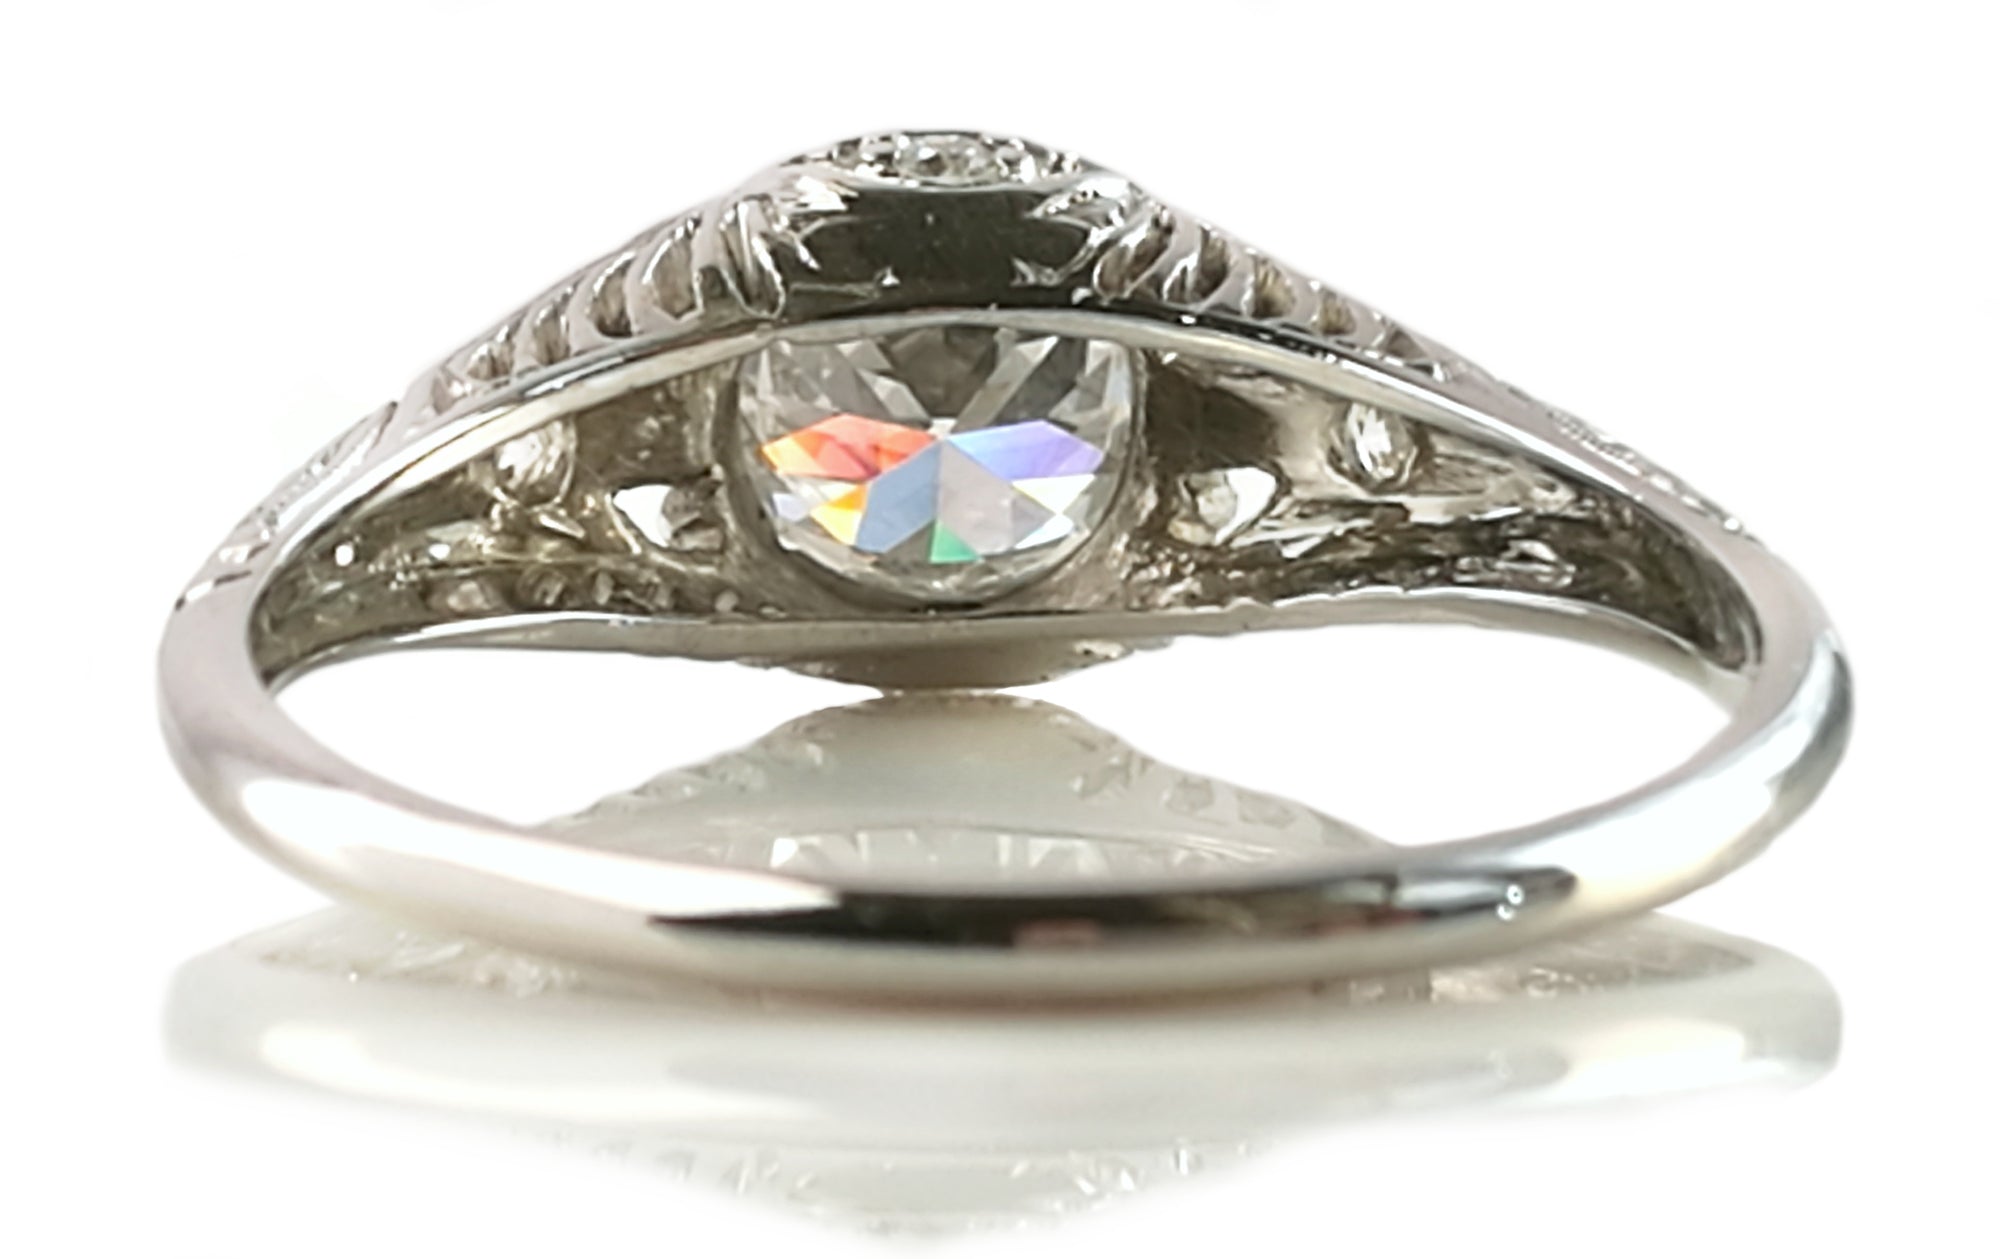 Antique Art Deco .75ct Old Cut Diamond 1920s Tiffany & Co Engagement Ring Box